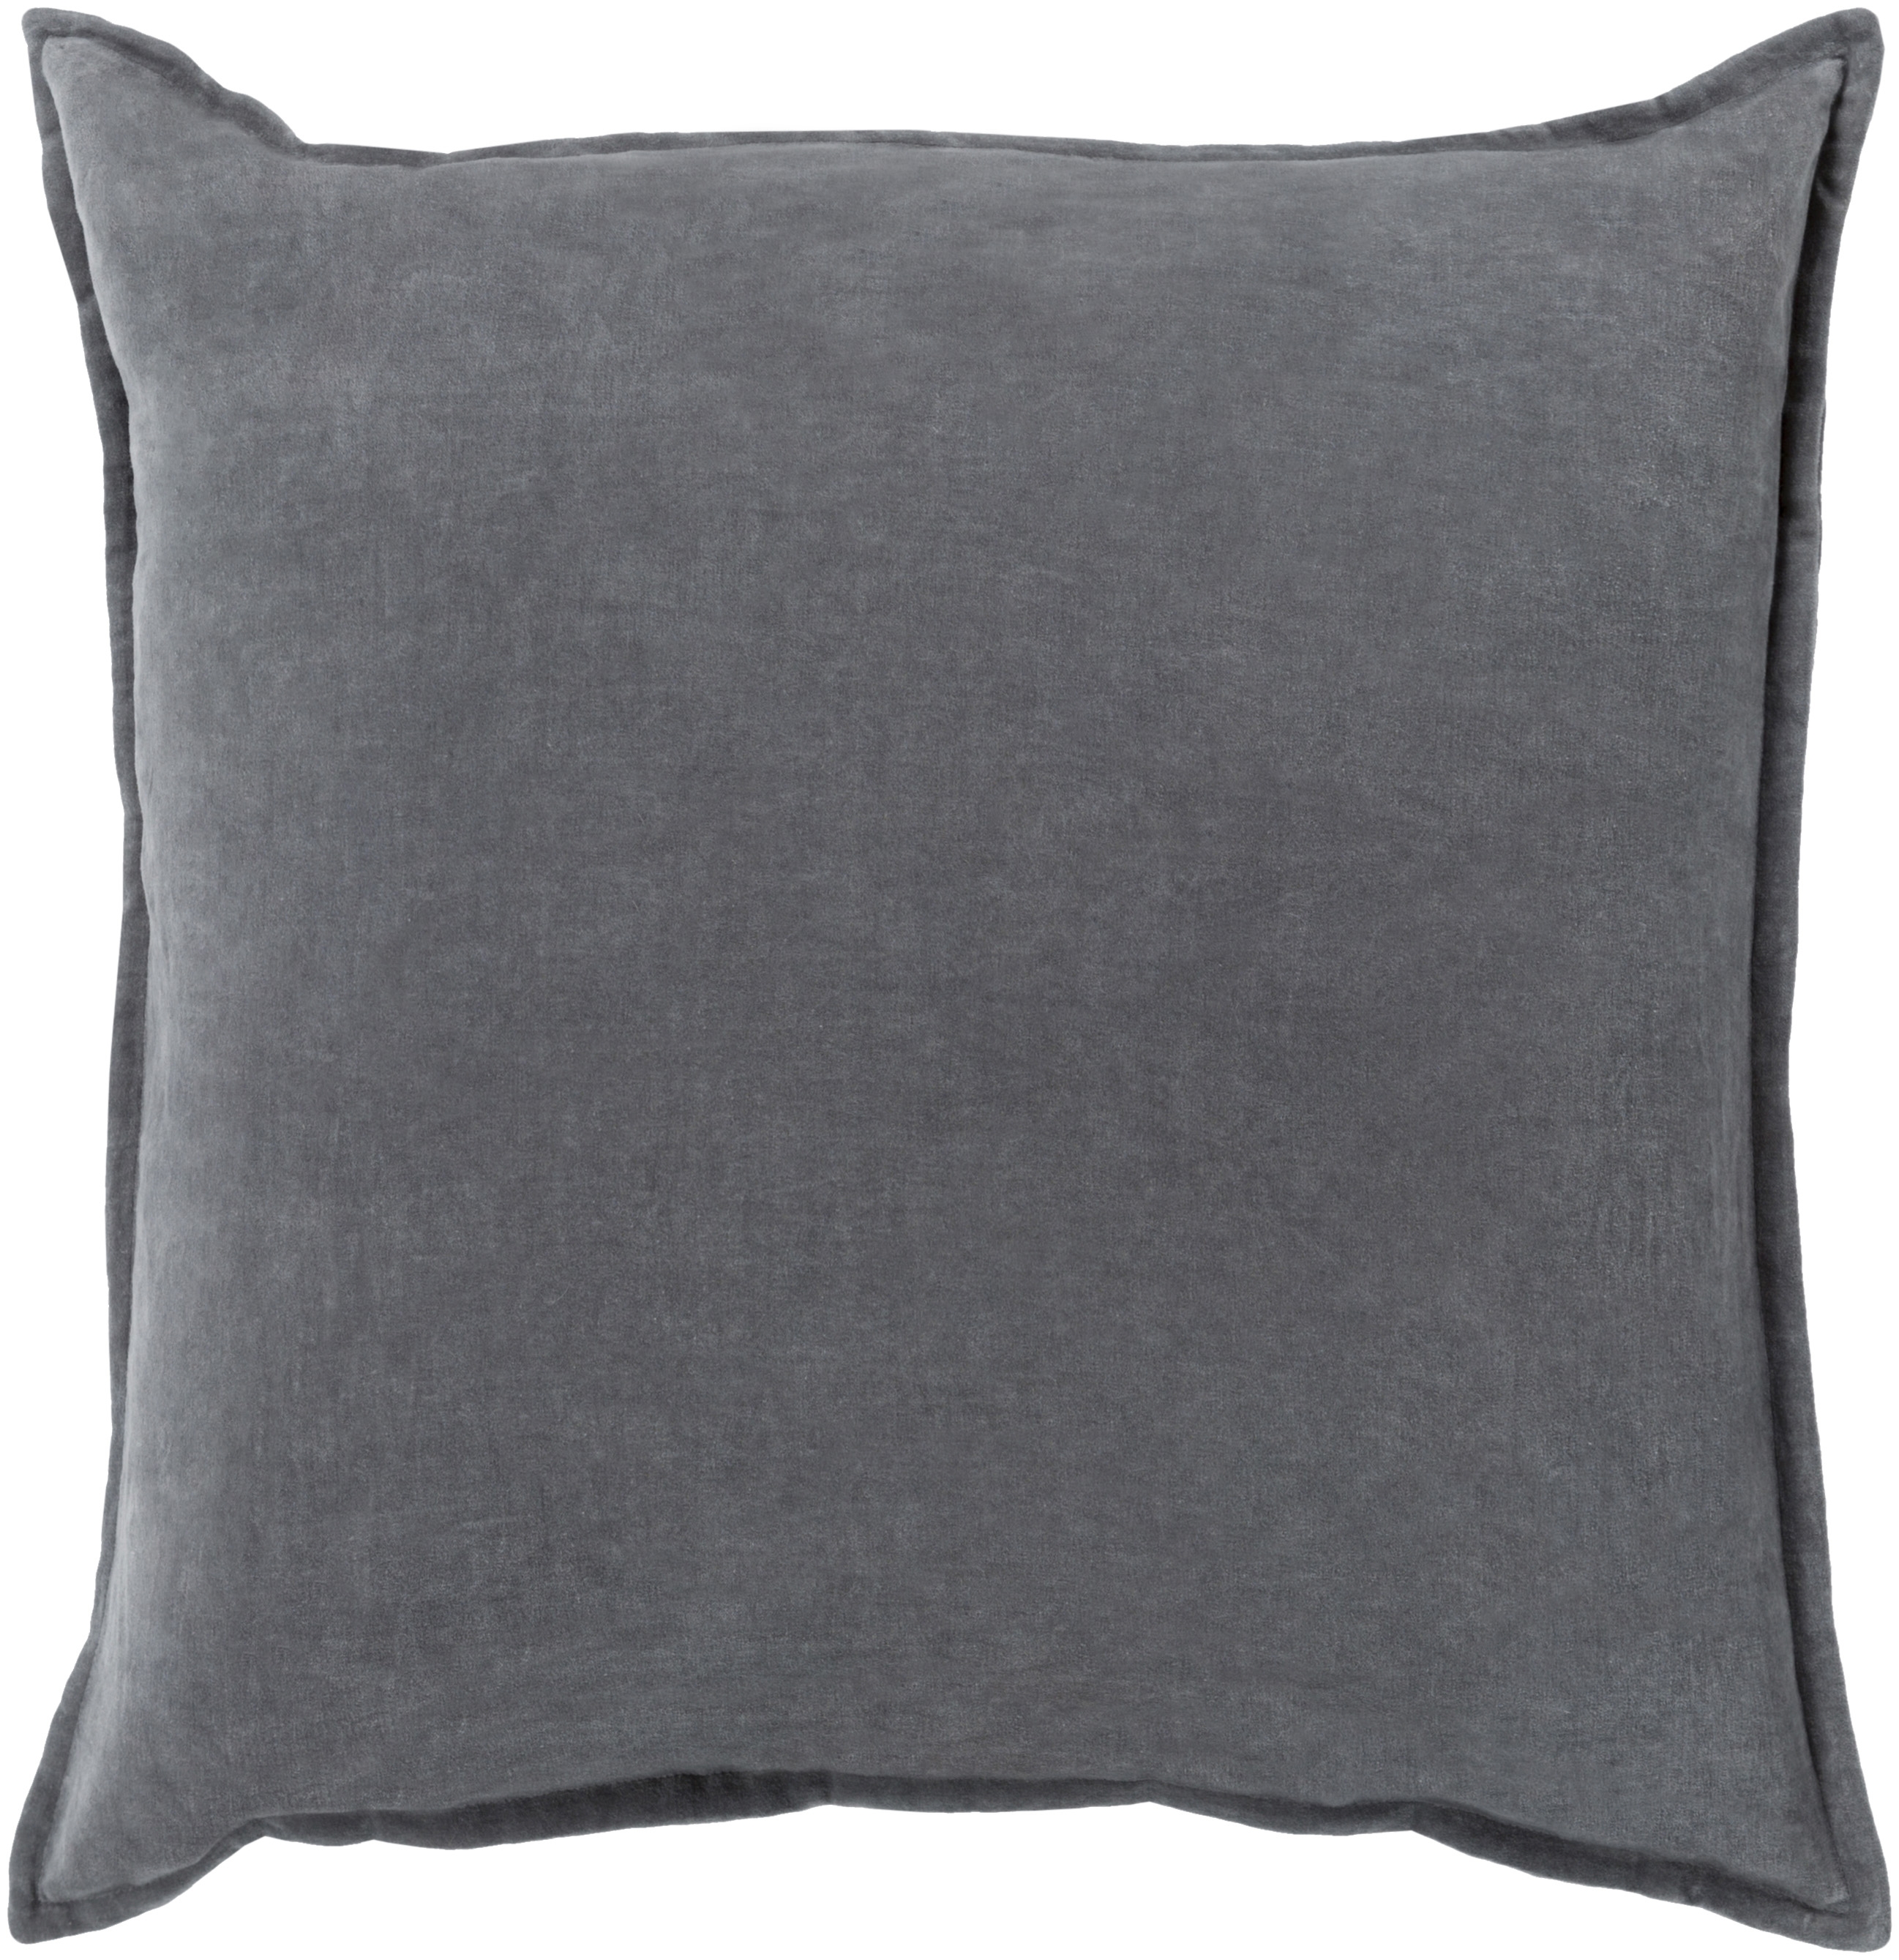 Cotton Velvet Throw Pillow, 22" x 22", with down insert - Image 0